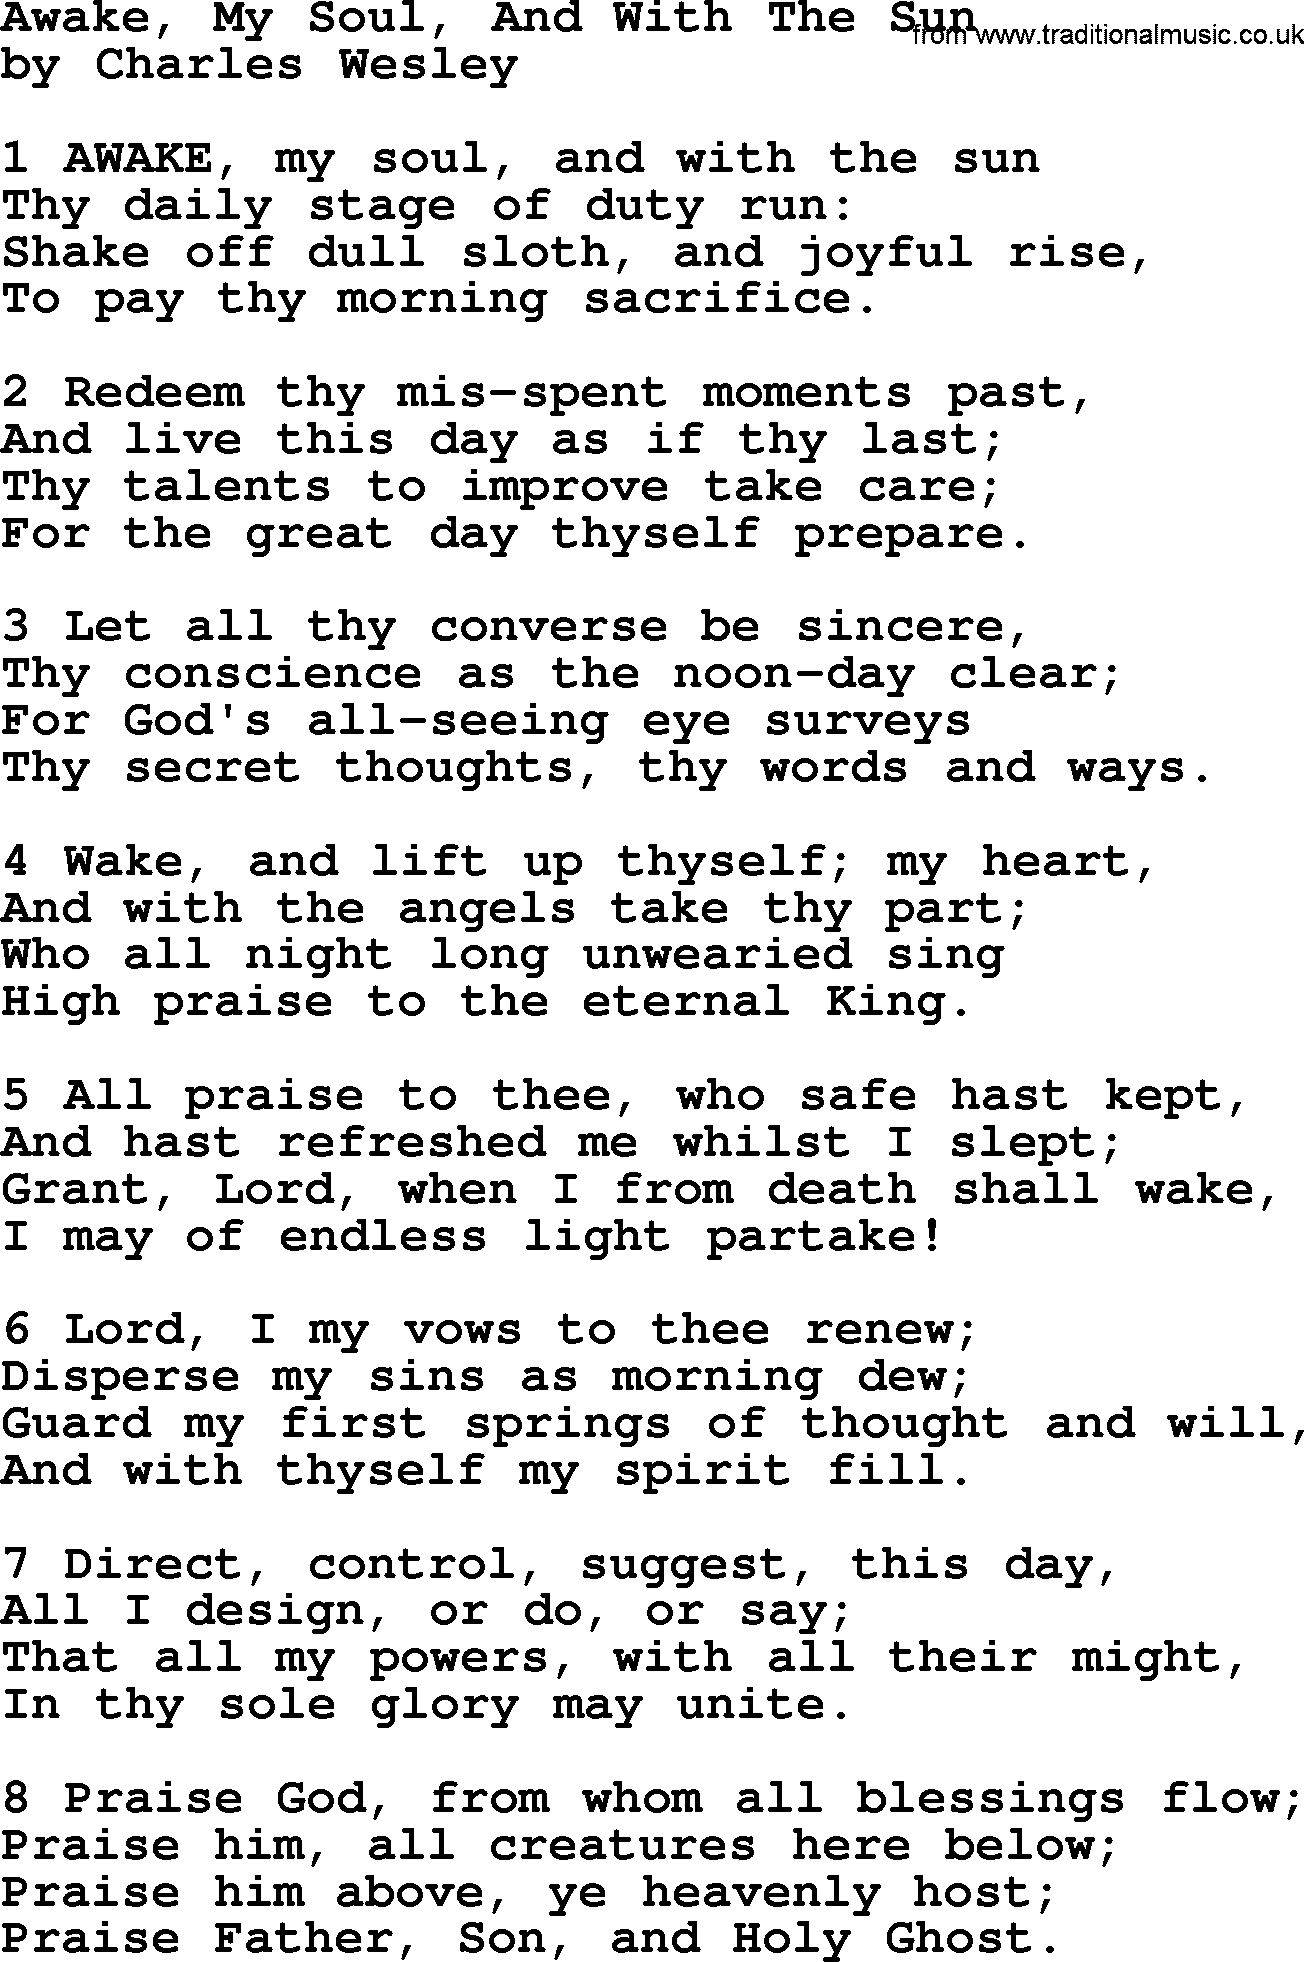 Charles Wesley hymn: Awake, My Soul, And With The Sun, lyrics